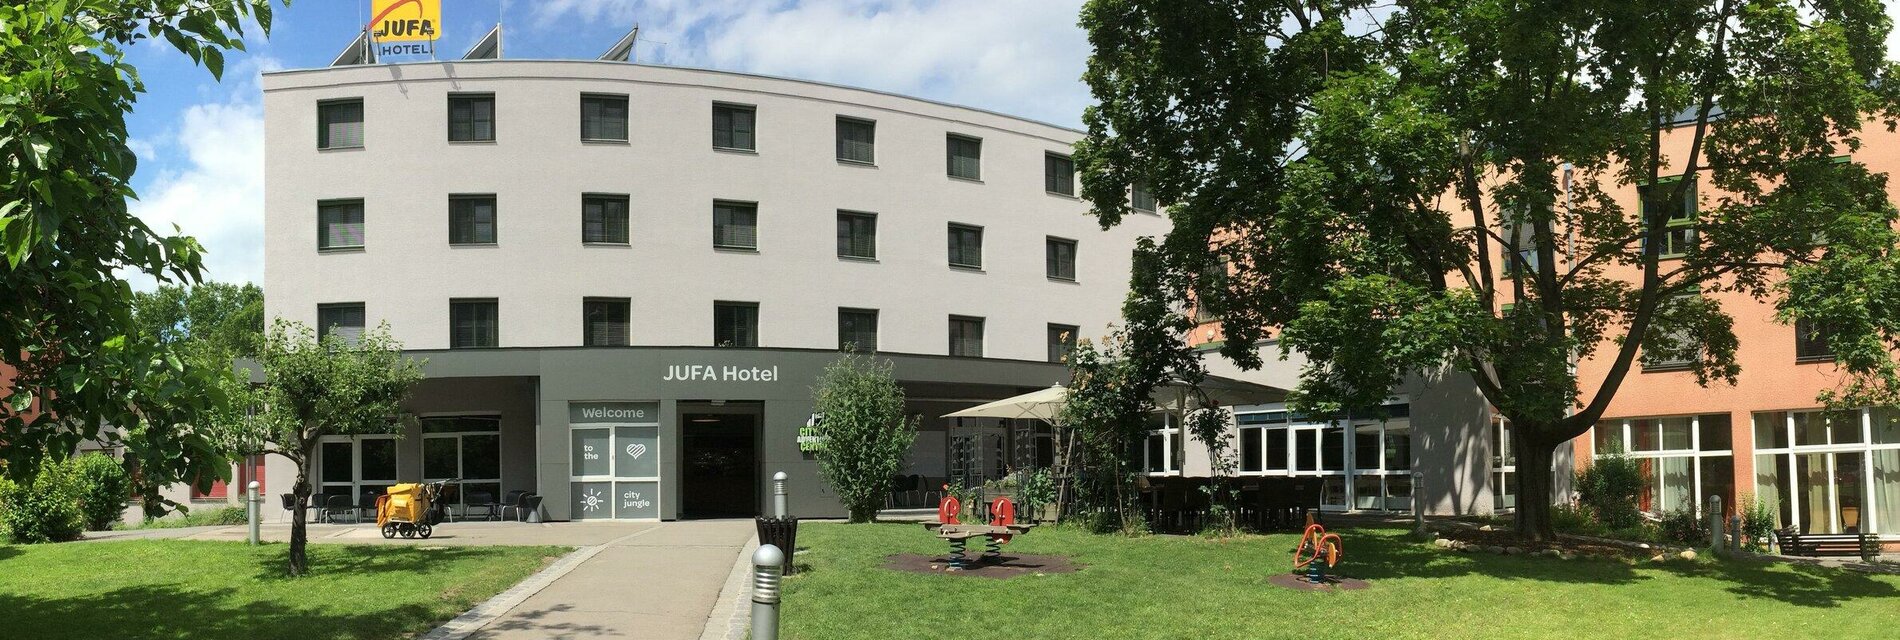 JUFA Hotel Graz City, Zugang zum Hotel